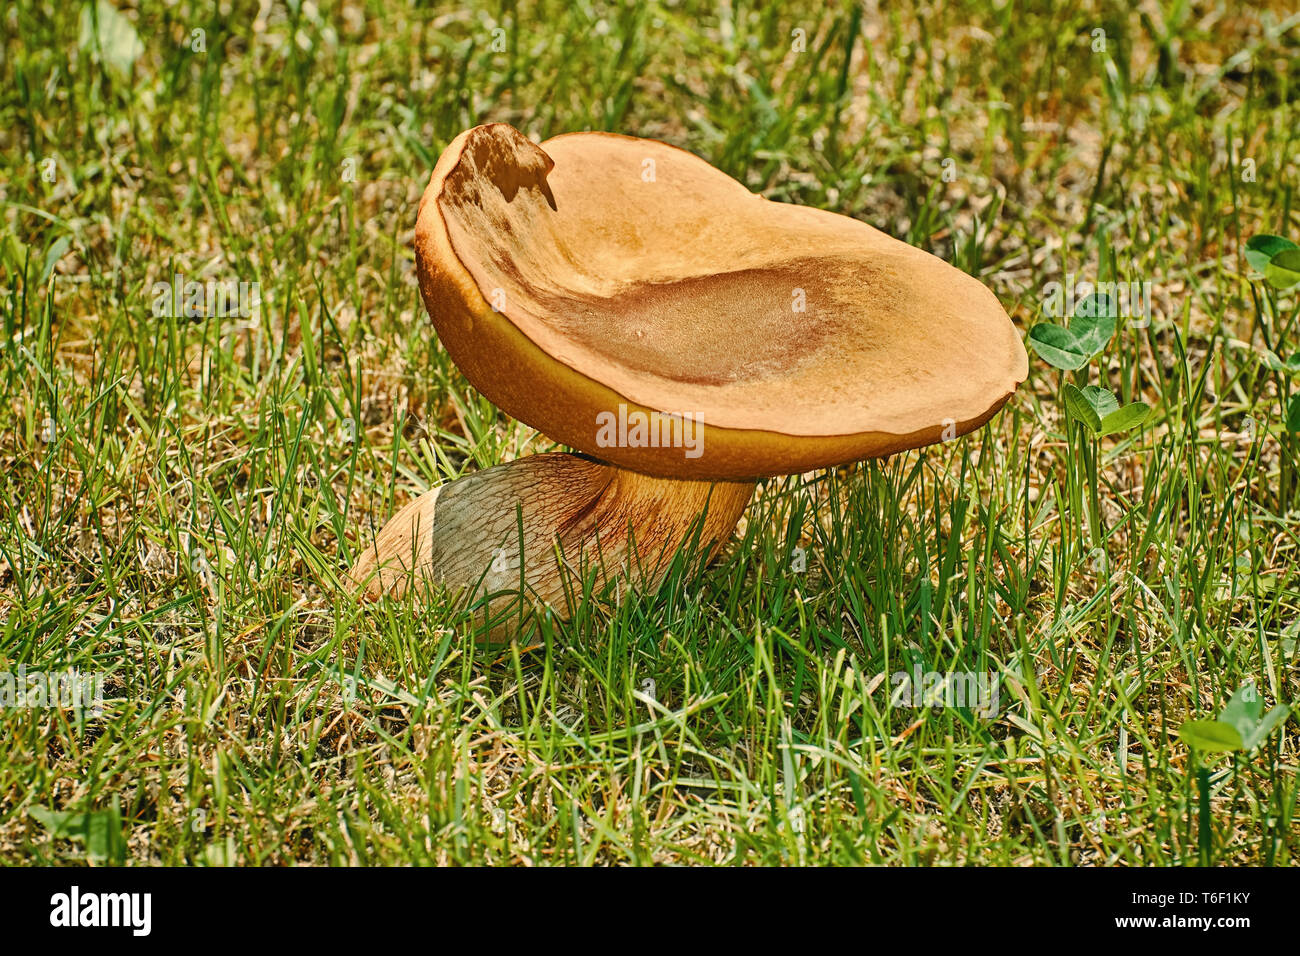 Mushroom in the Grass Stock Photo